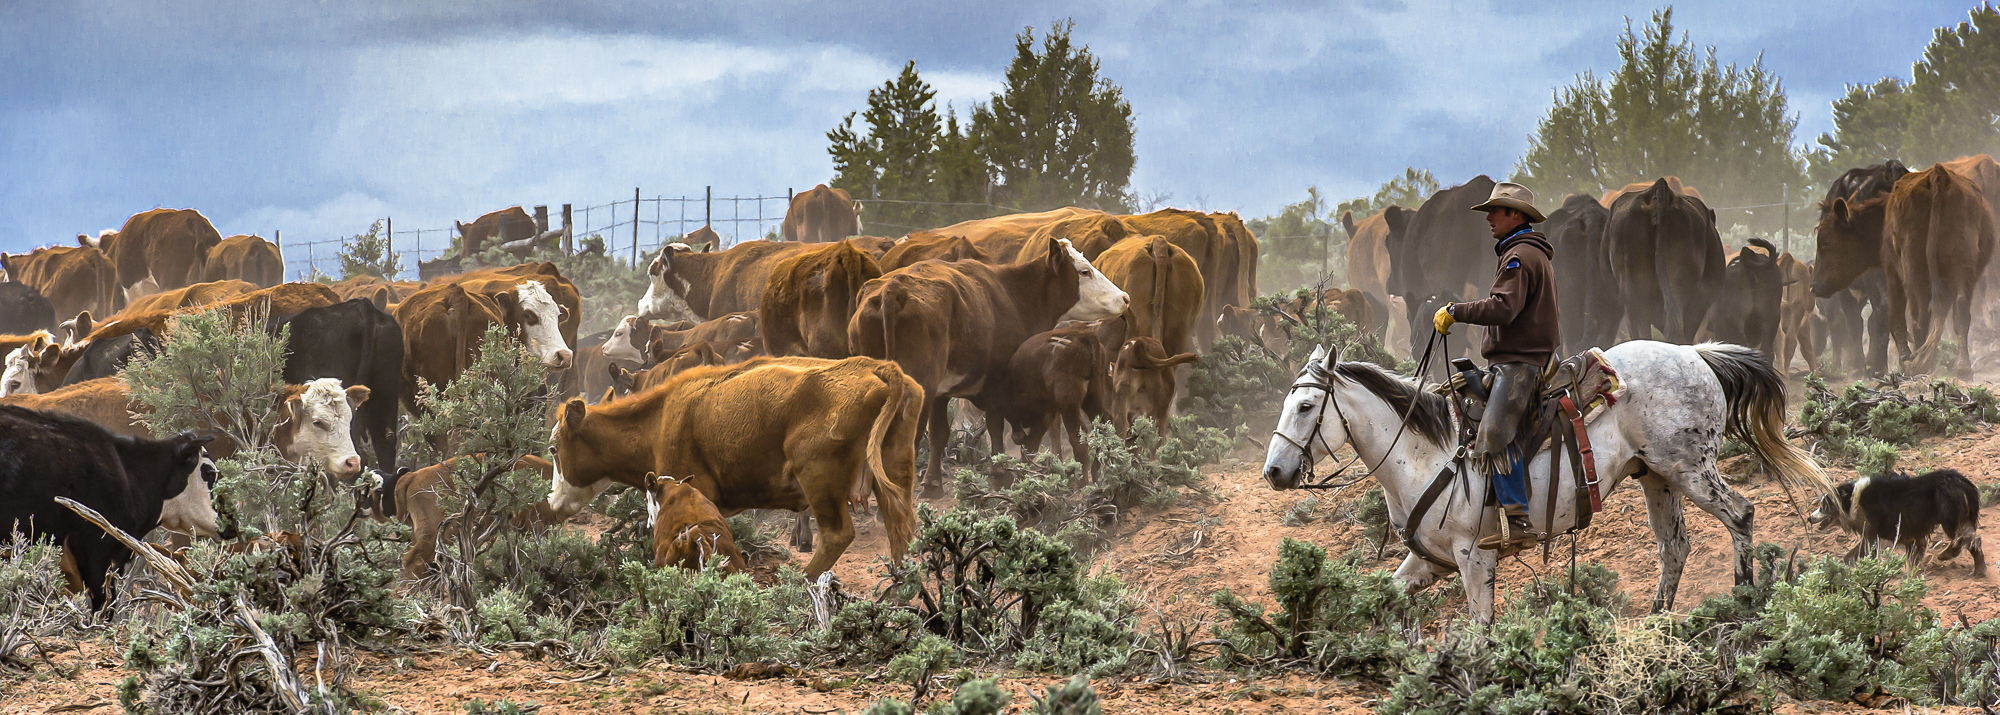 “Cattle Drive”, 2010, Moab, UT